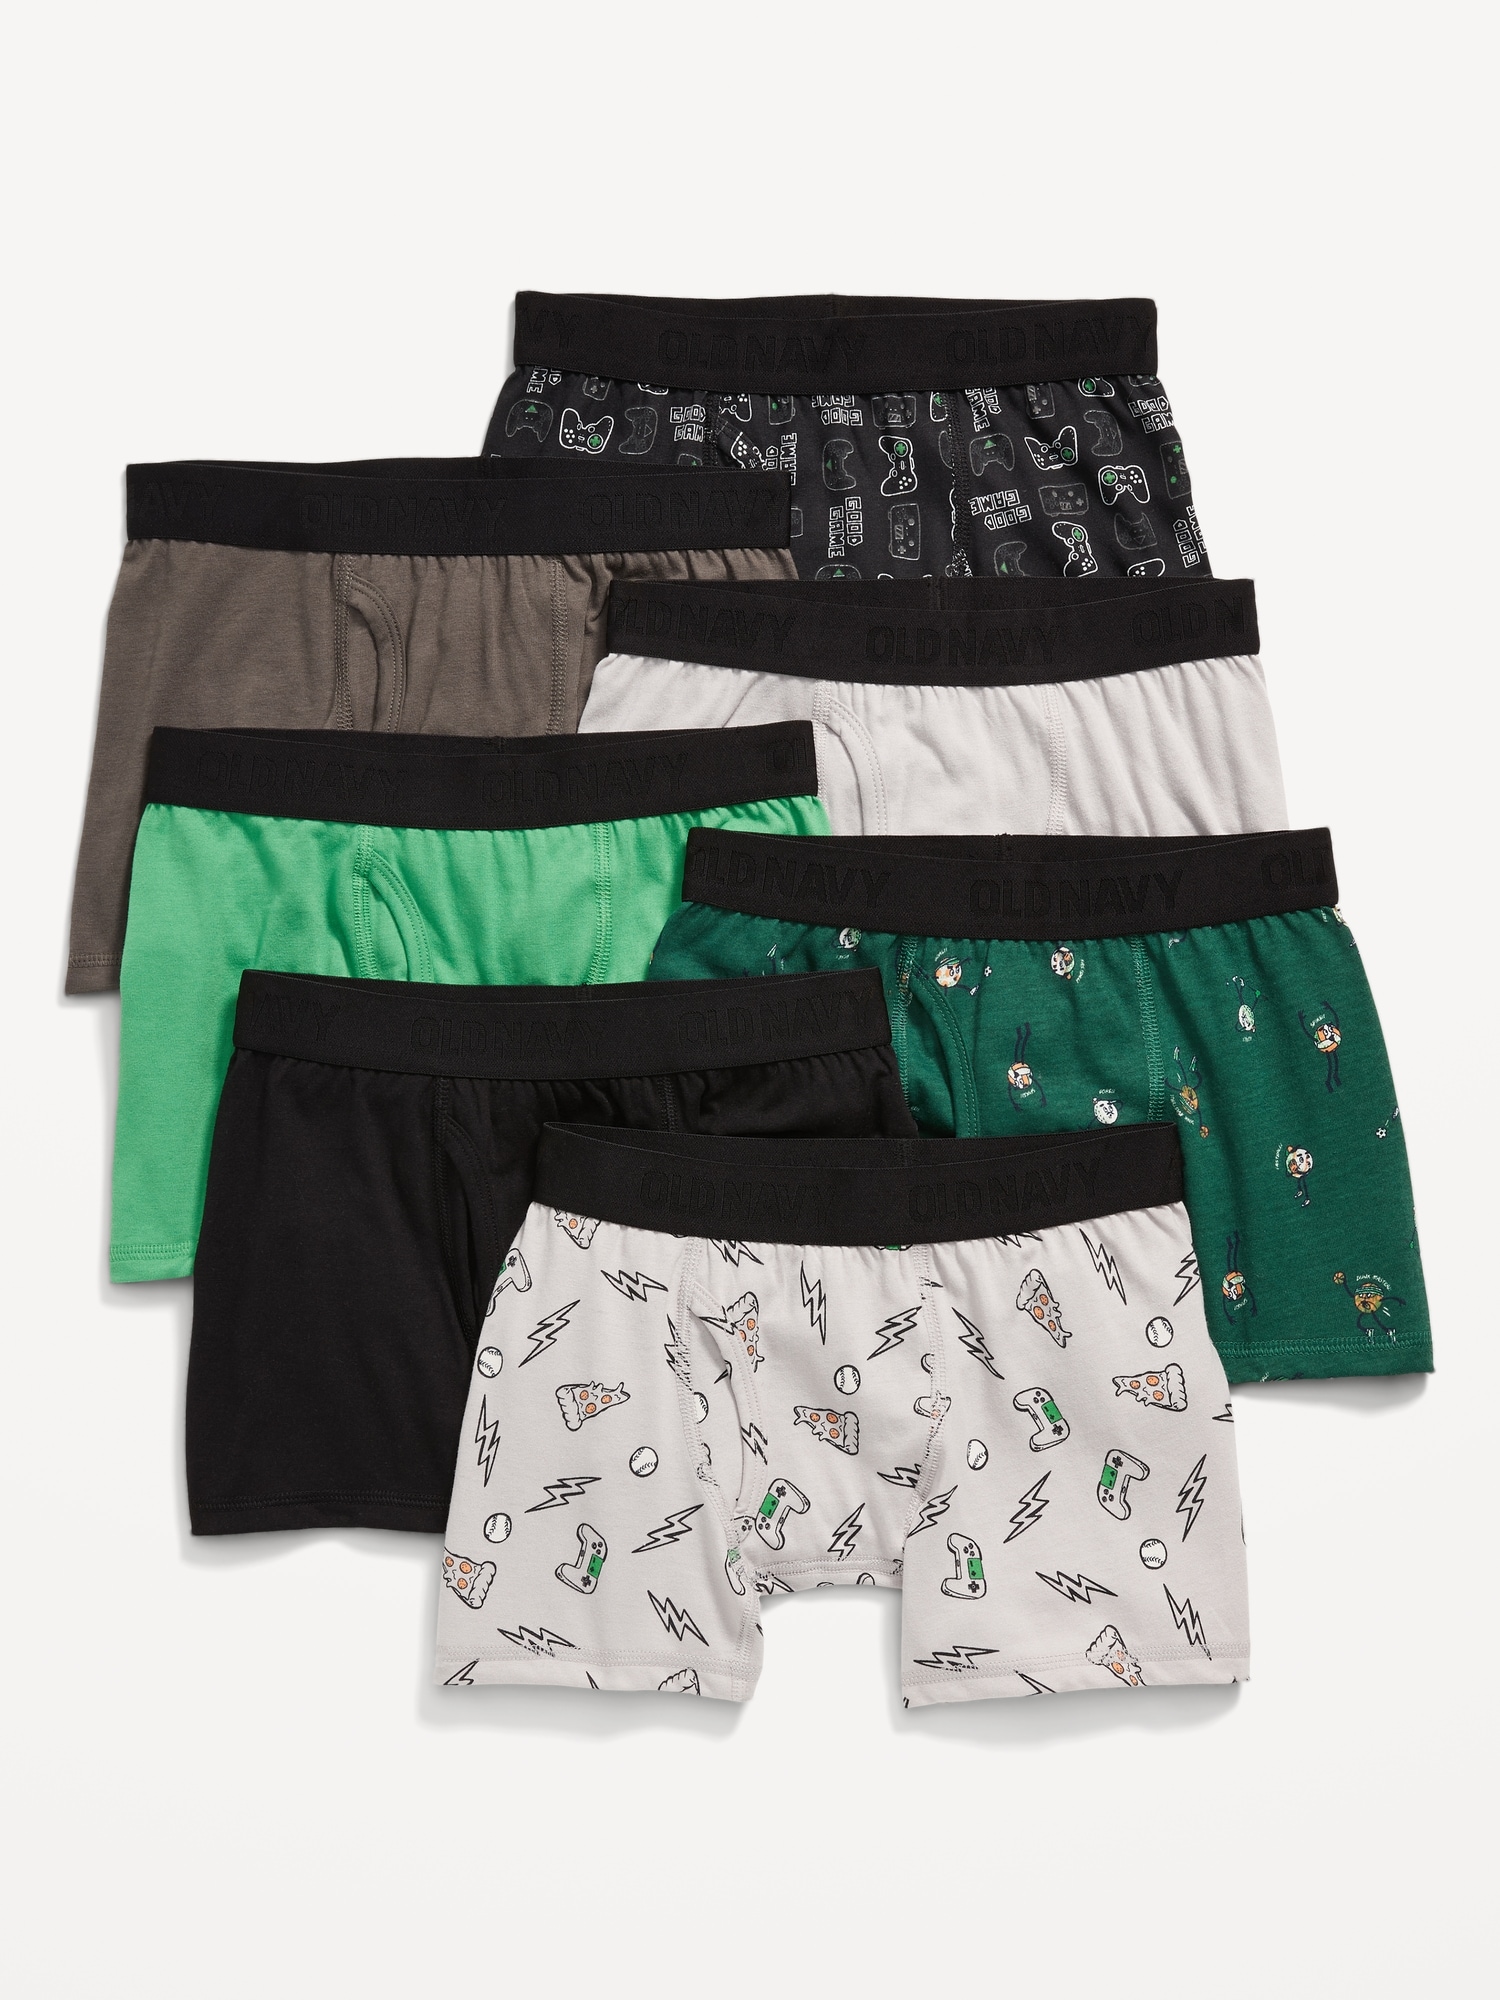 Boxer-Briefs Underwear 7-Pack for Toddler Boys